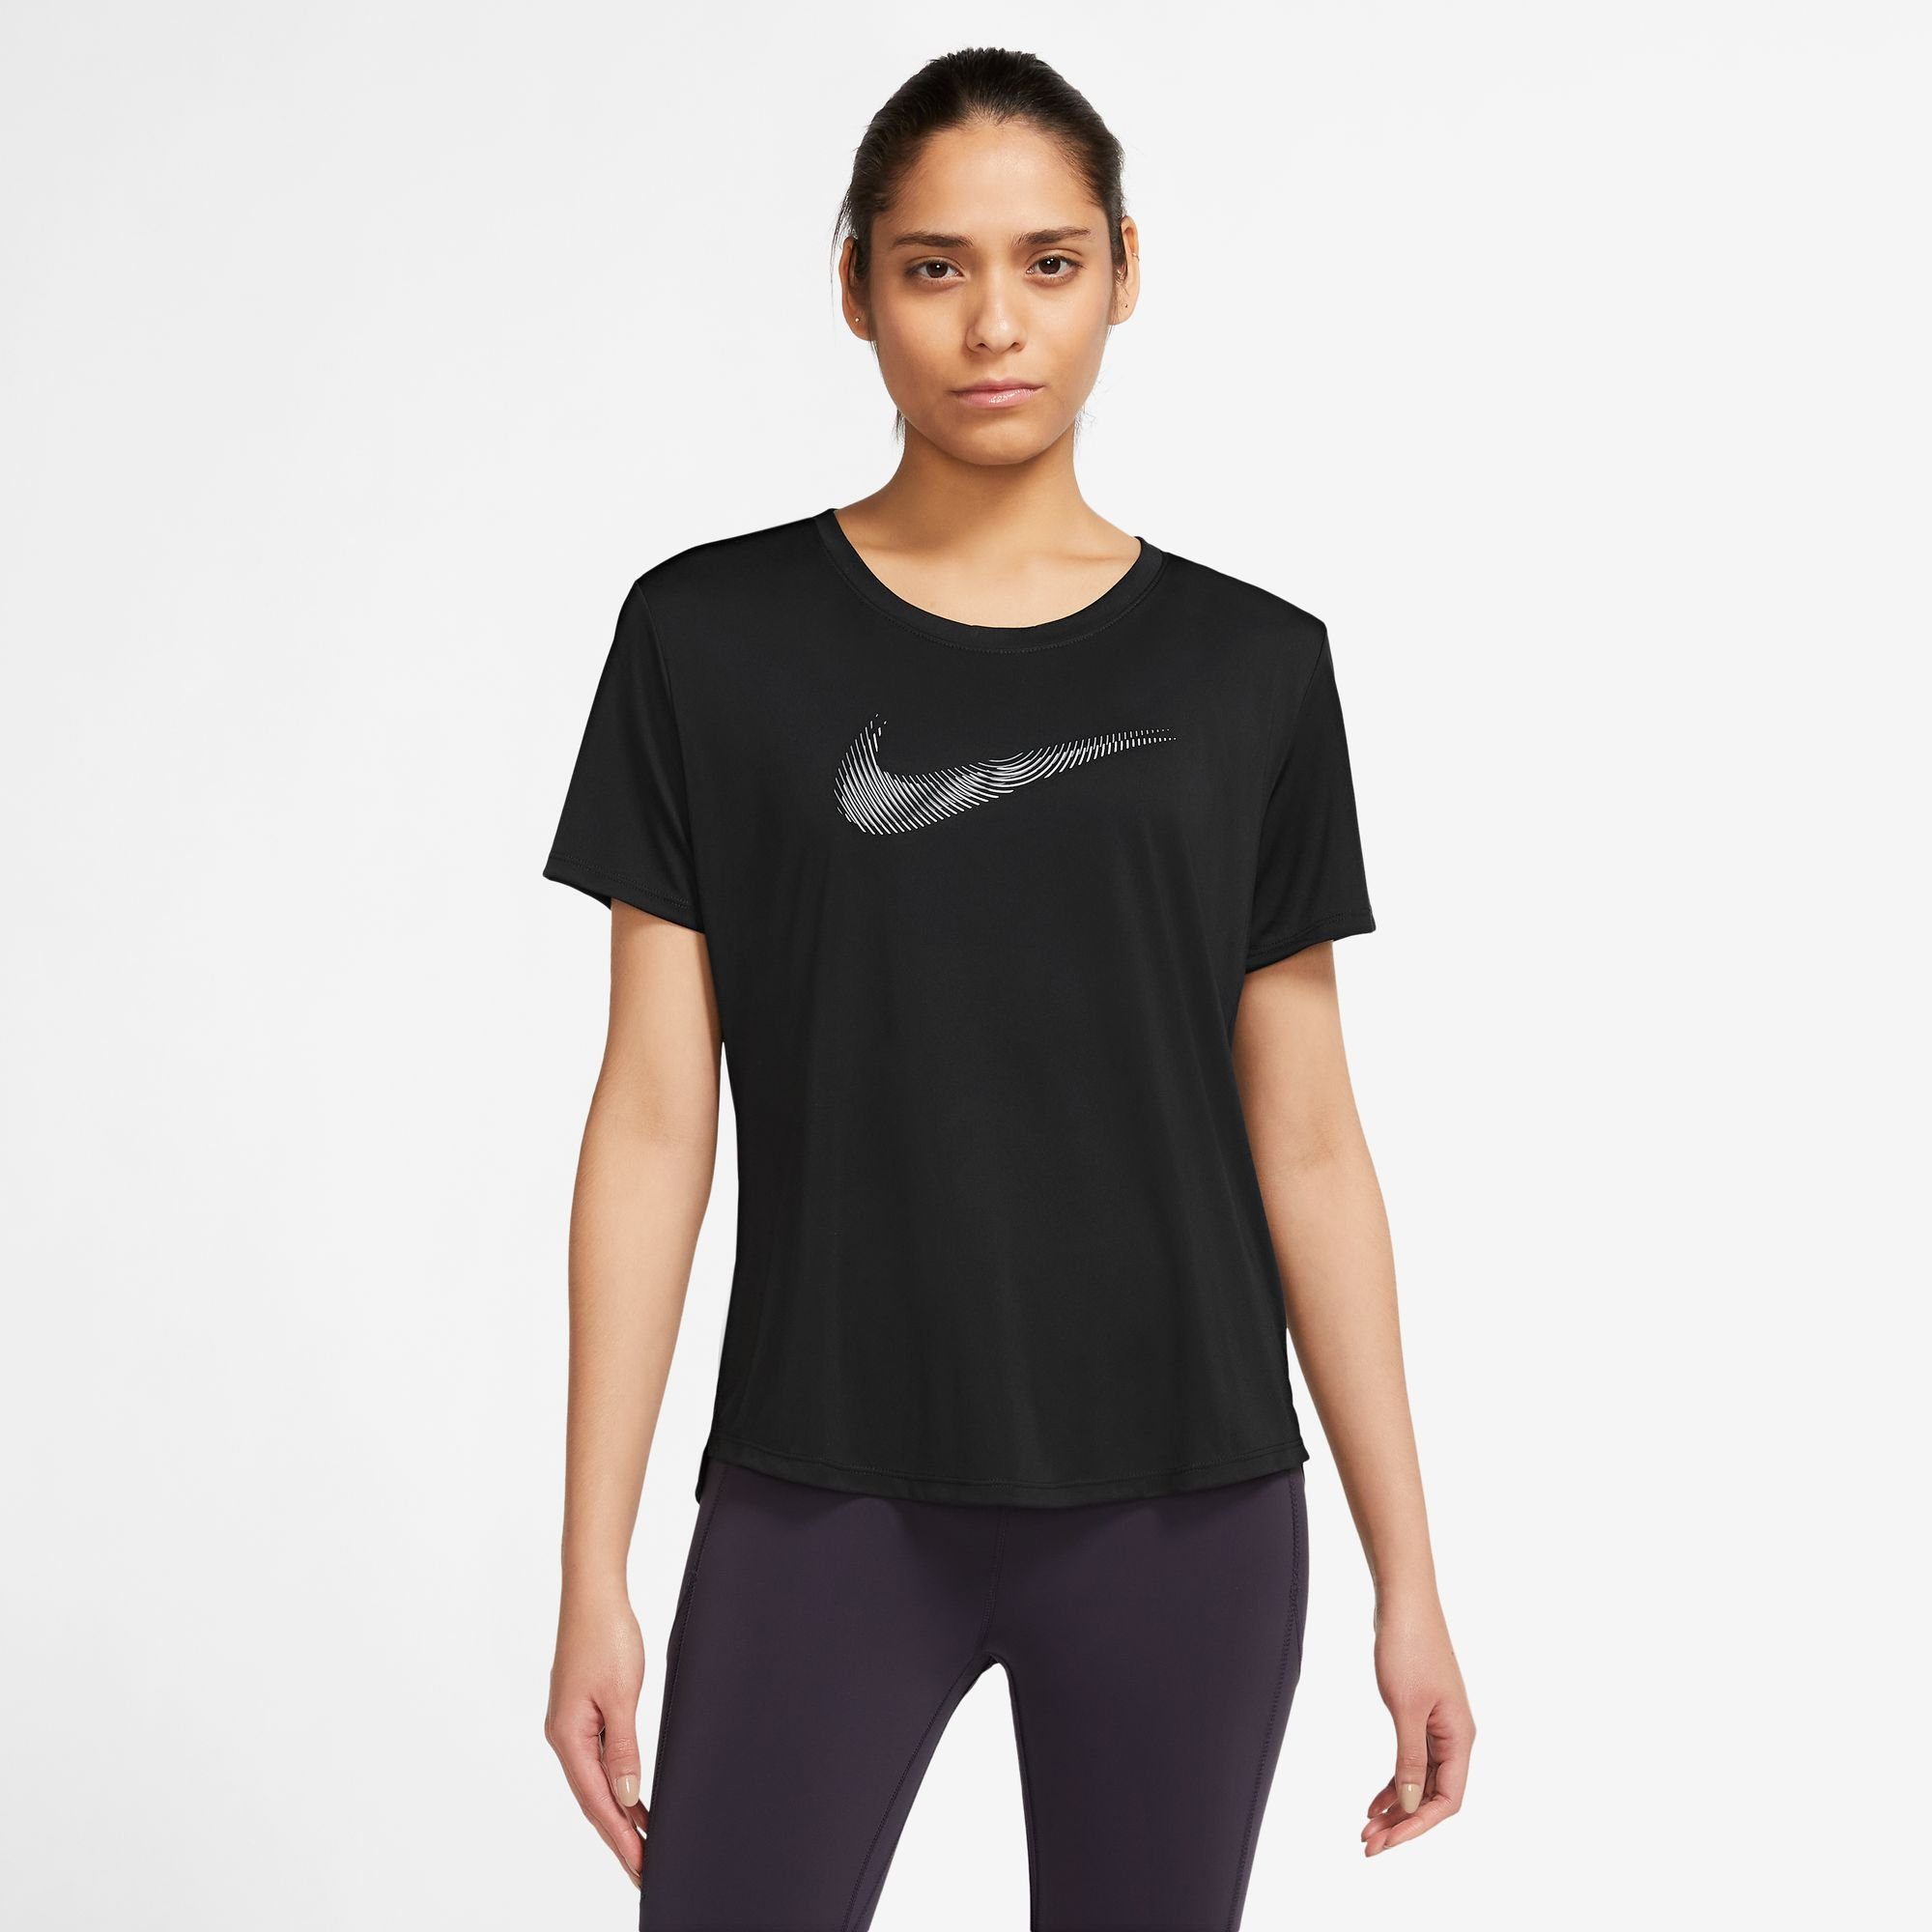 GREY Laufshirt WOMEN'S Nike SWOOSH BLACK/COOL RUNNING TOP DRI-FIT SHORT-SLEEVE